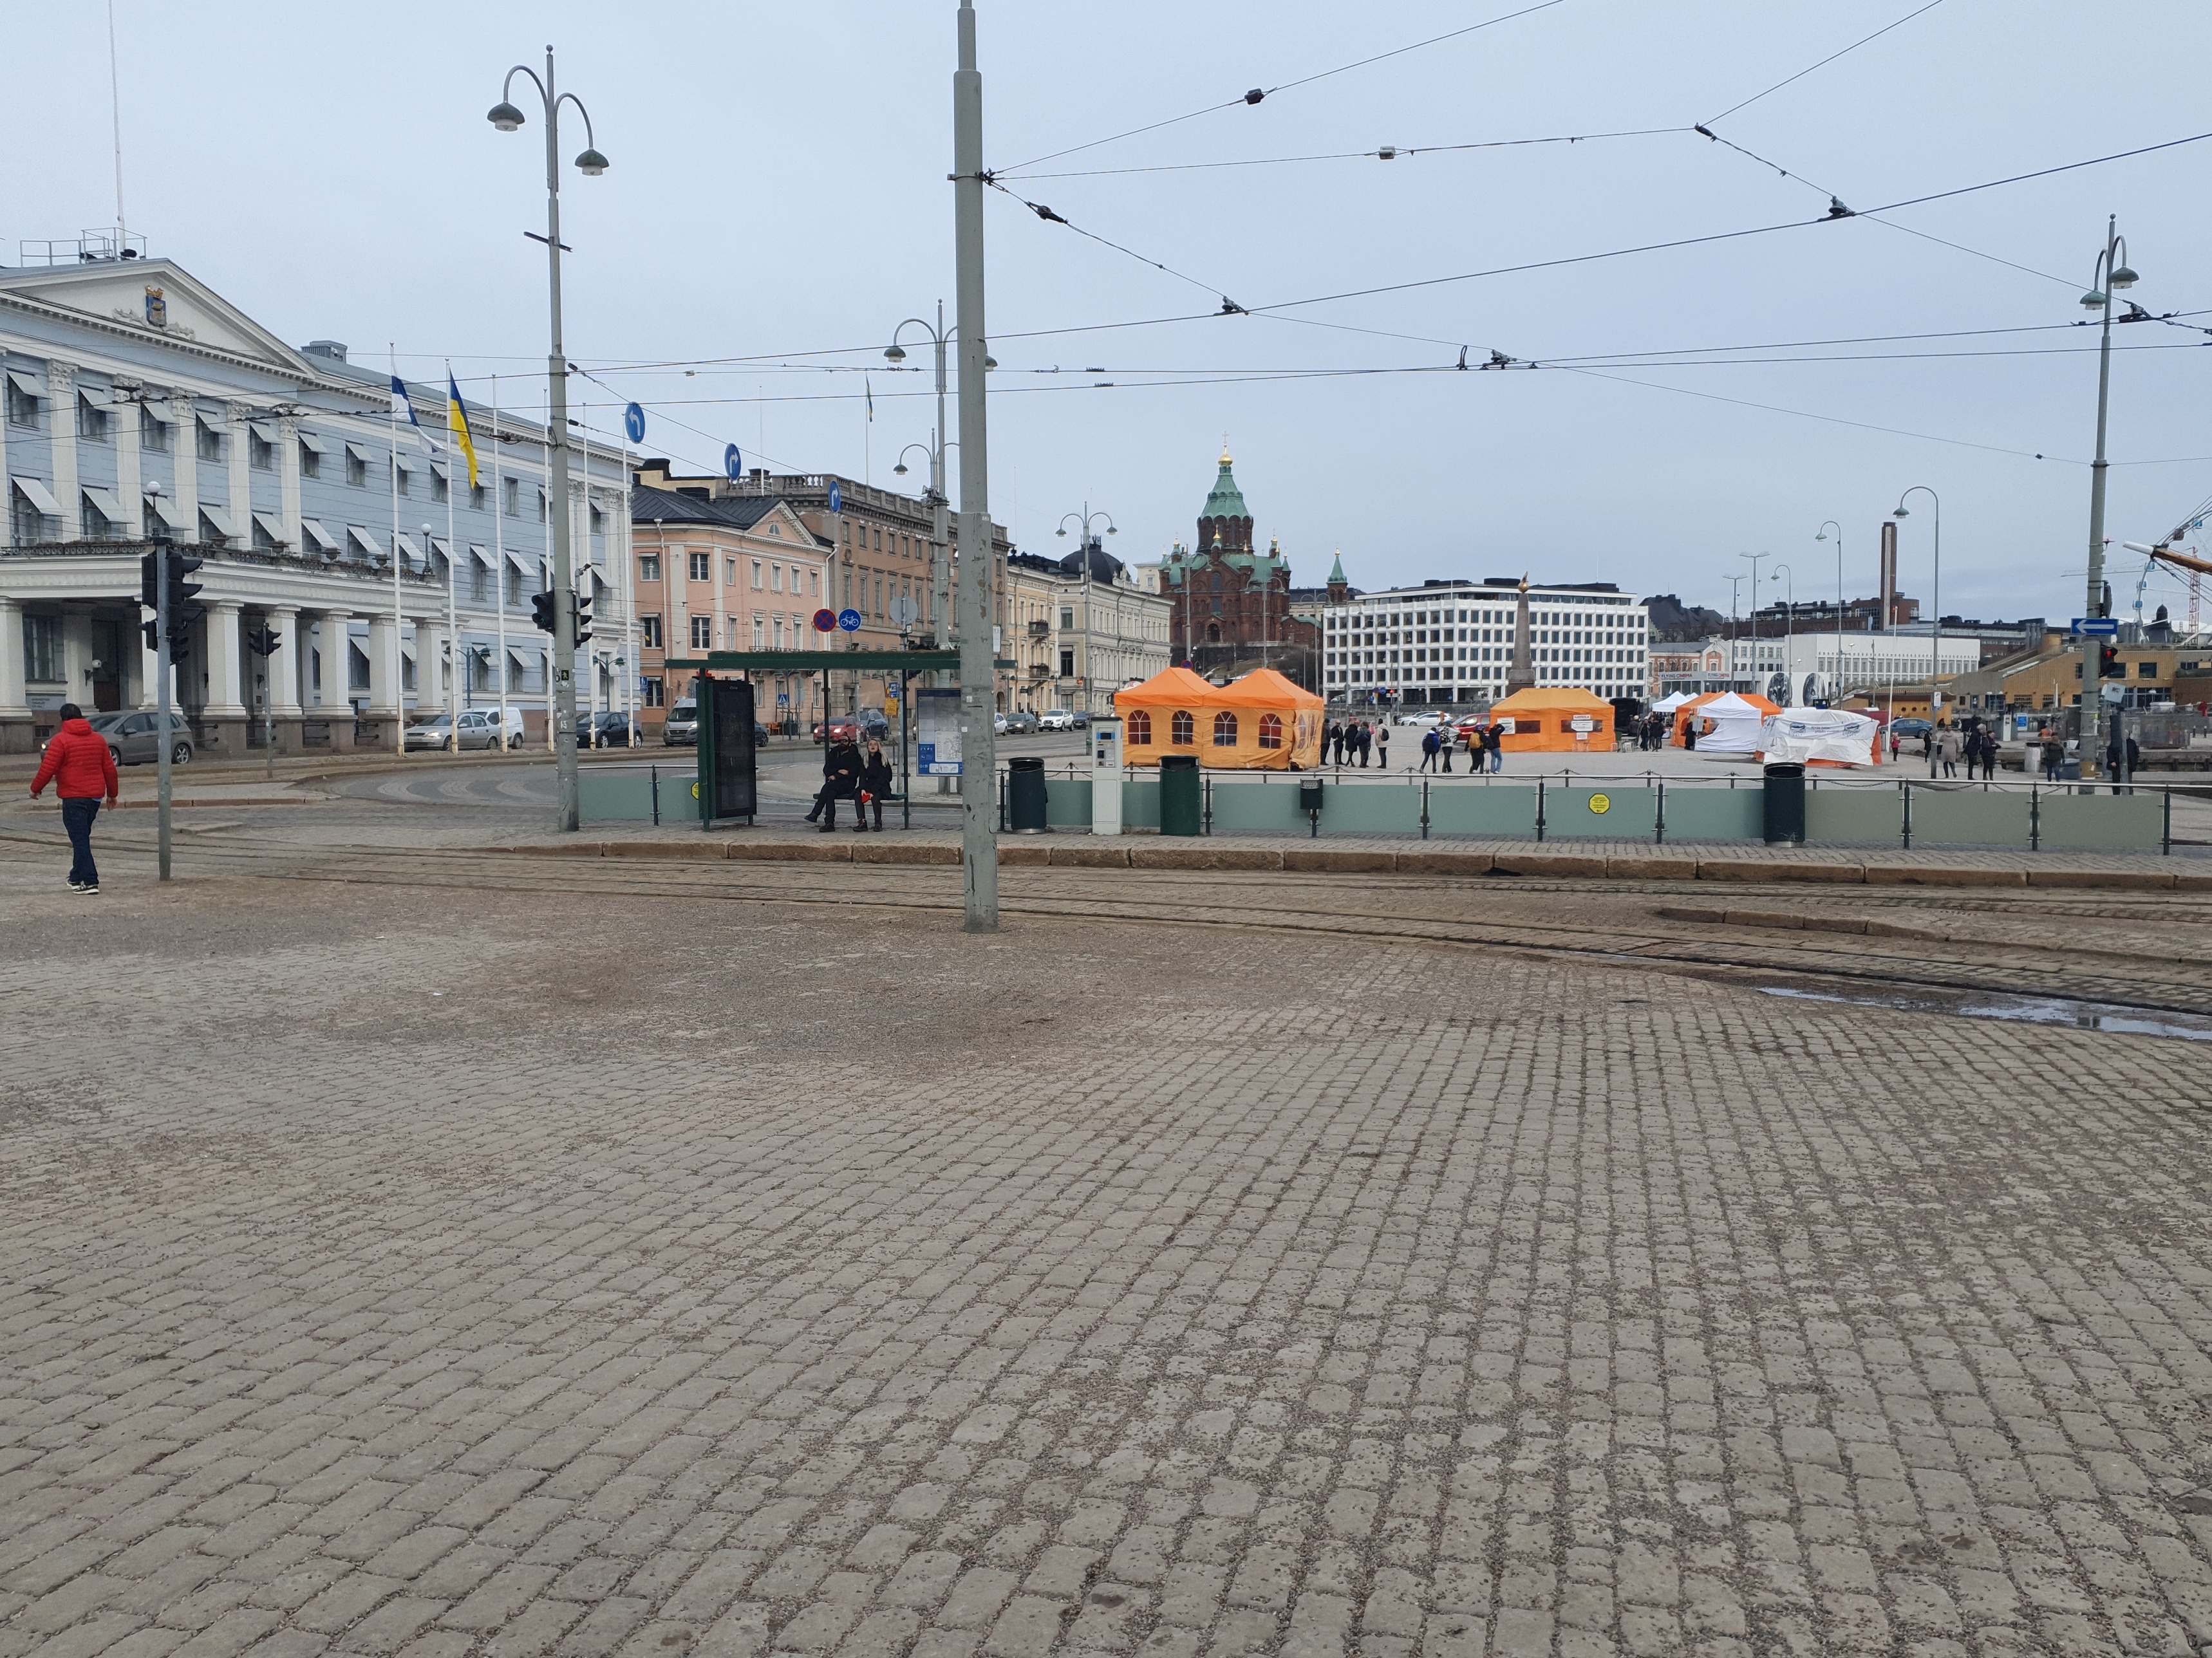 Snowflake Helsinki Market Square rephoto